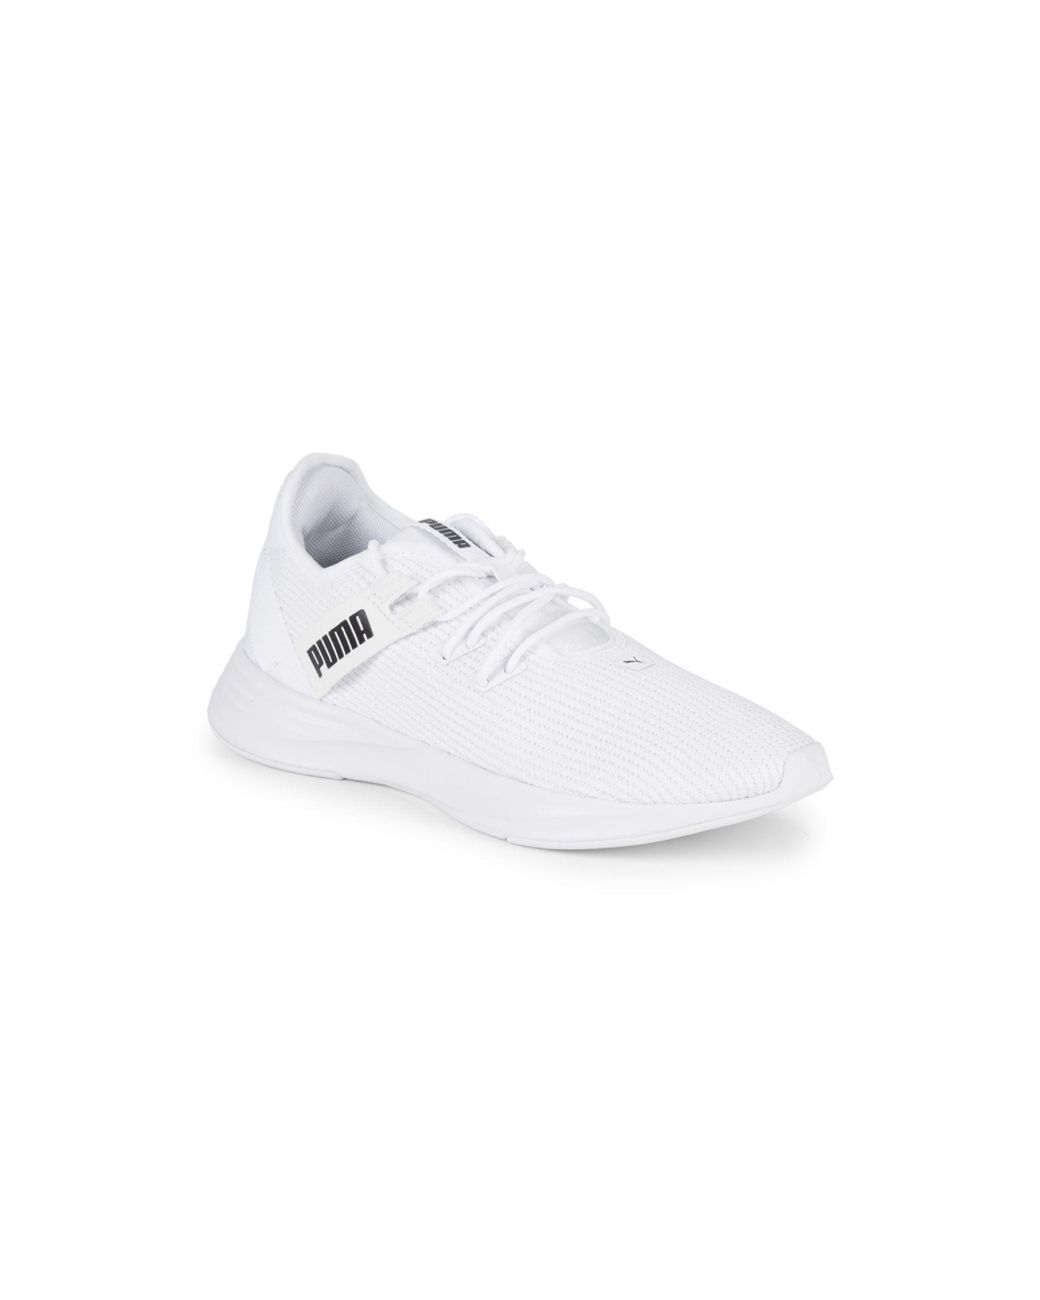 PUMA Radiate Xt Softfoam+ Optimal Comfort Sneakers in White | Lyst